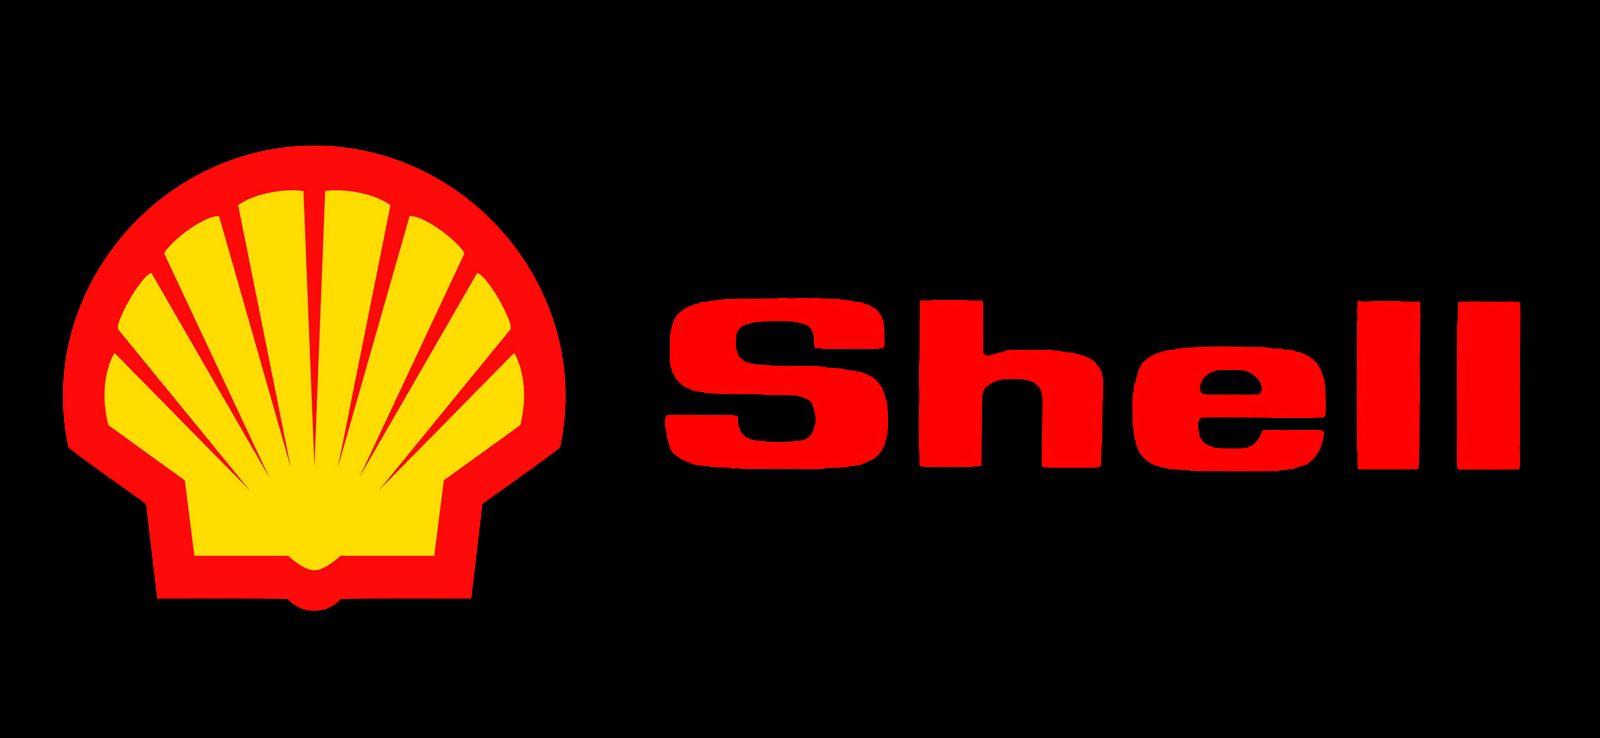 Shell Logo - Shell Logo, Shell Symbol, Meaning, History and Evolution